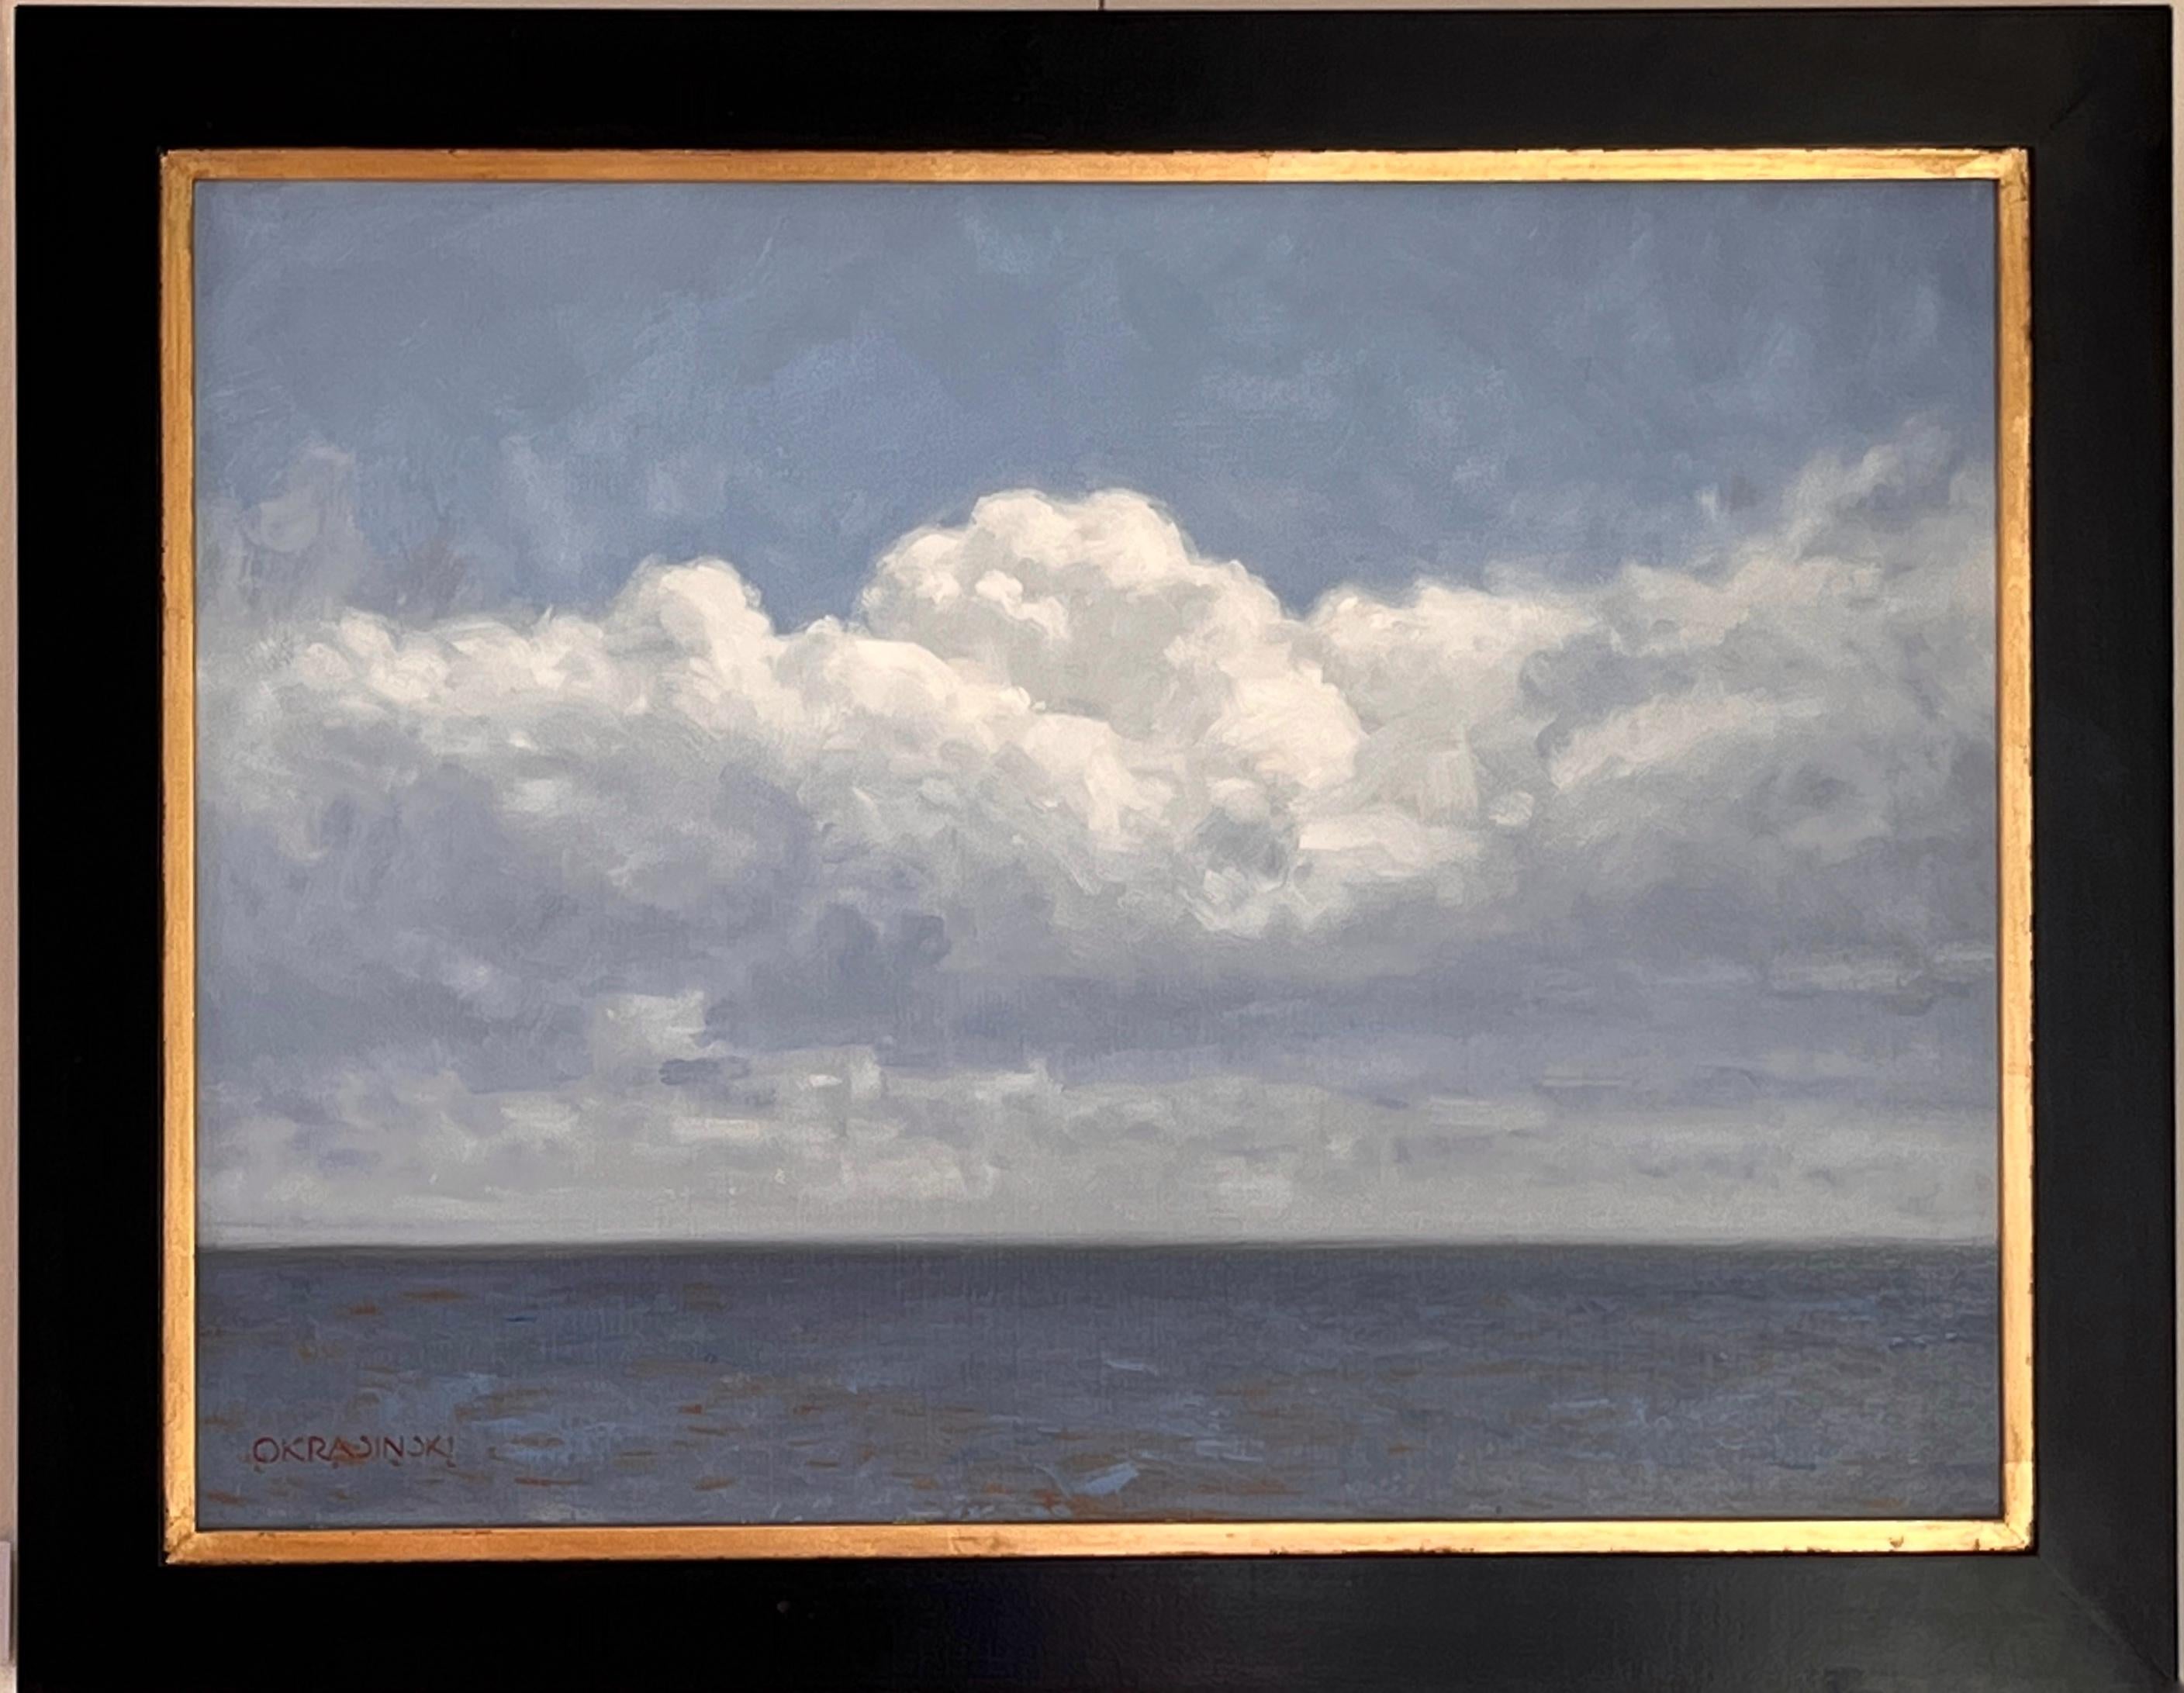 Patrick Okrasinski Landscape Painting - Clouds Over the Sea